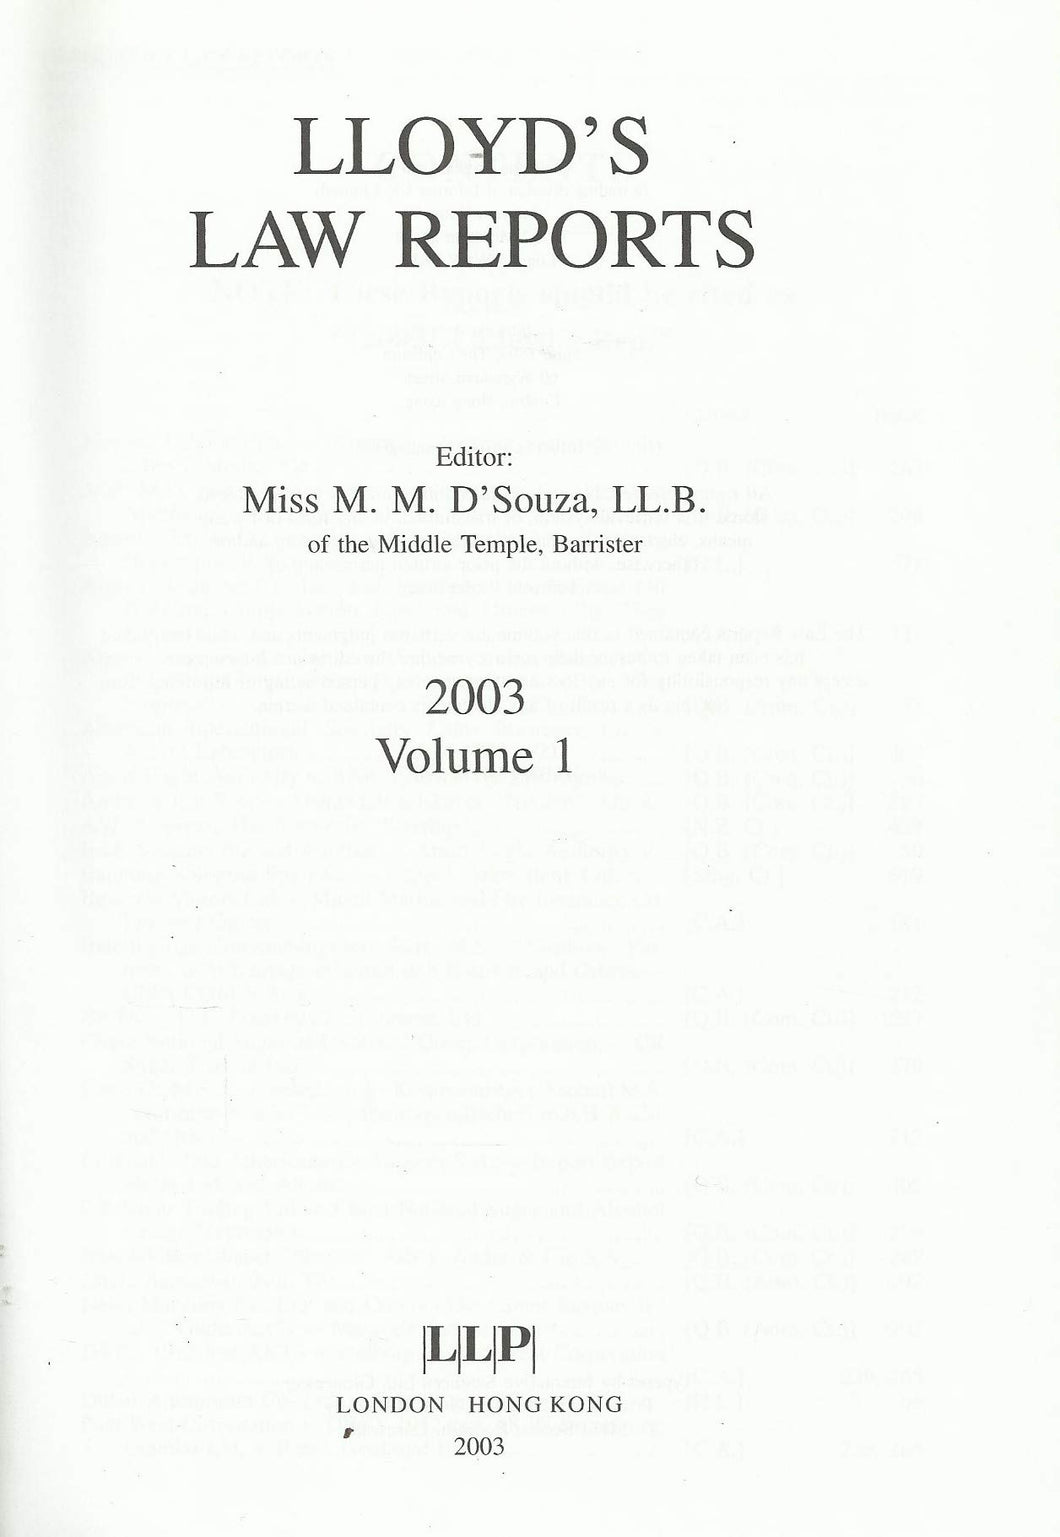 Lloyd's Law Reports - 2003, Volume 1